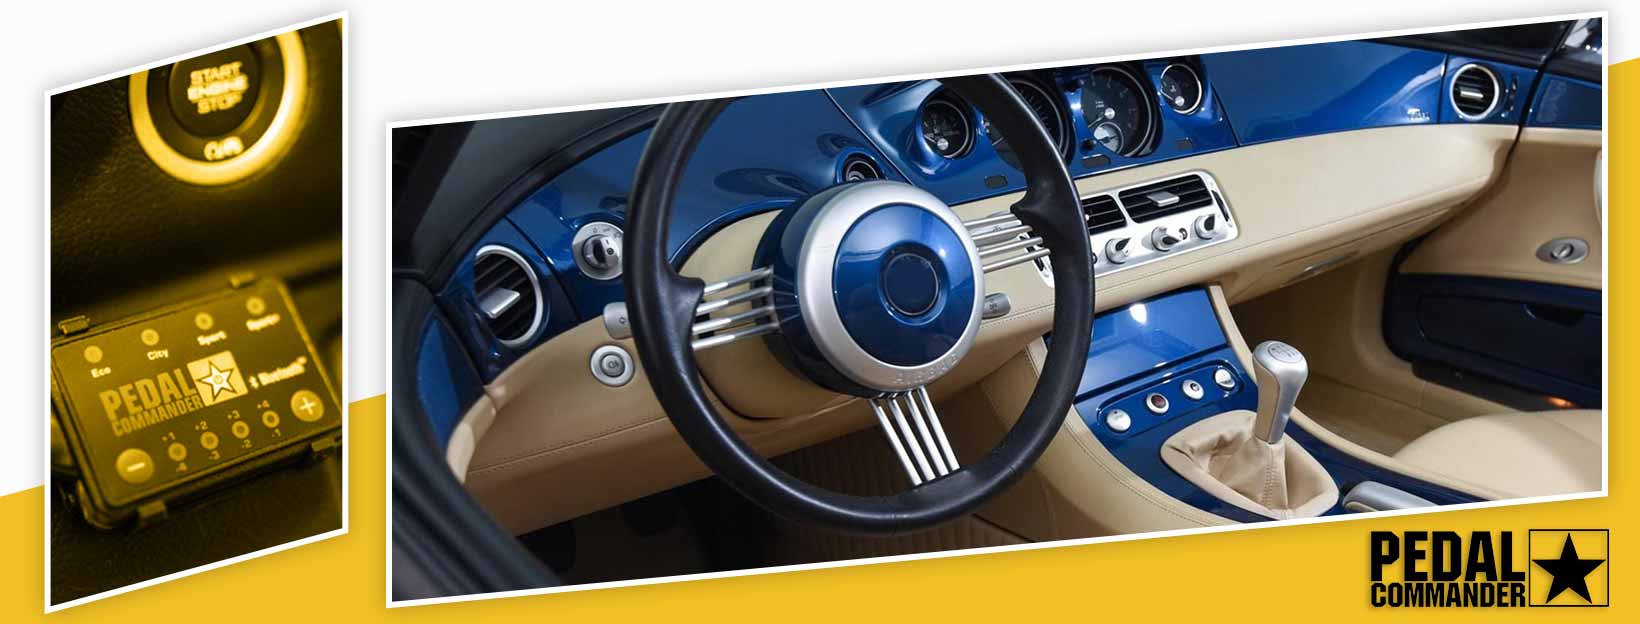 Pedal Commander for BMW Z8 - interior